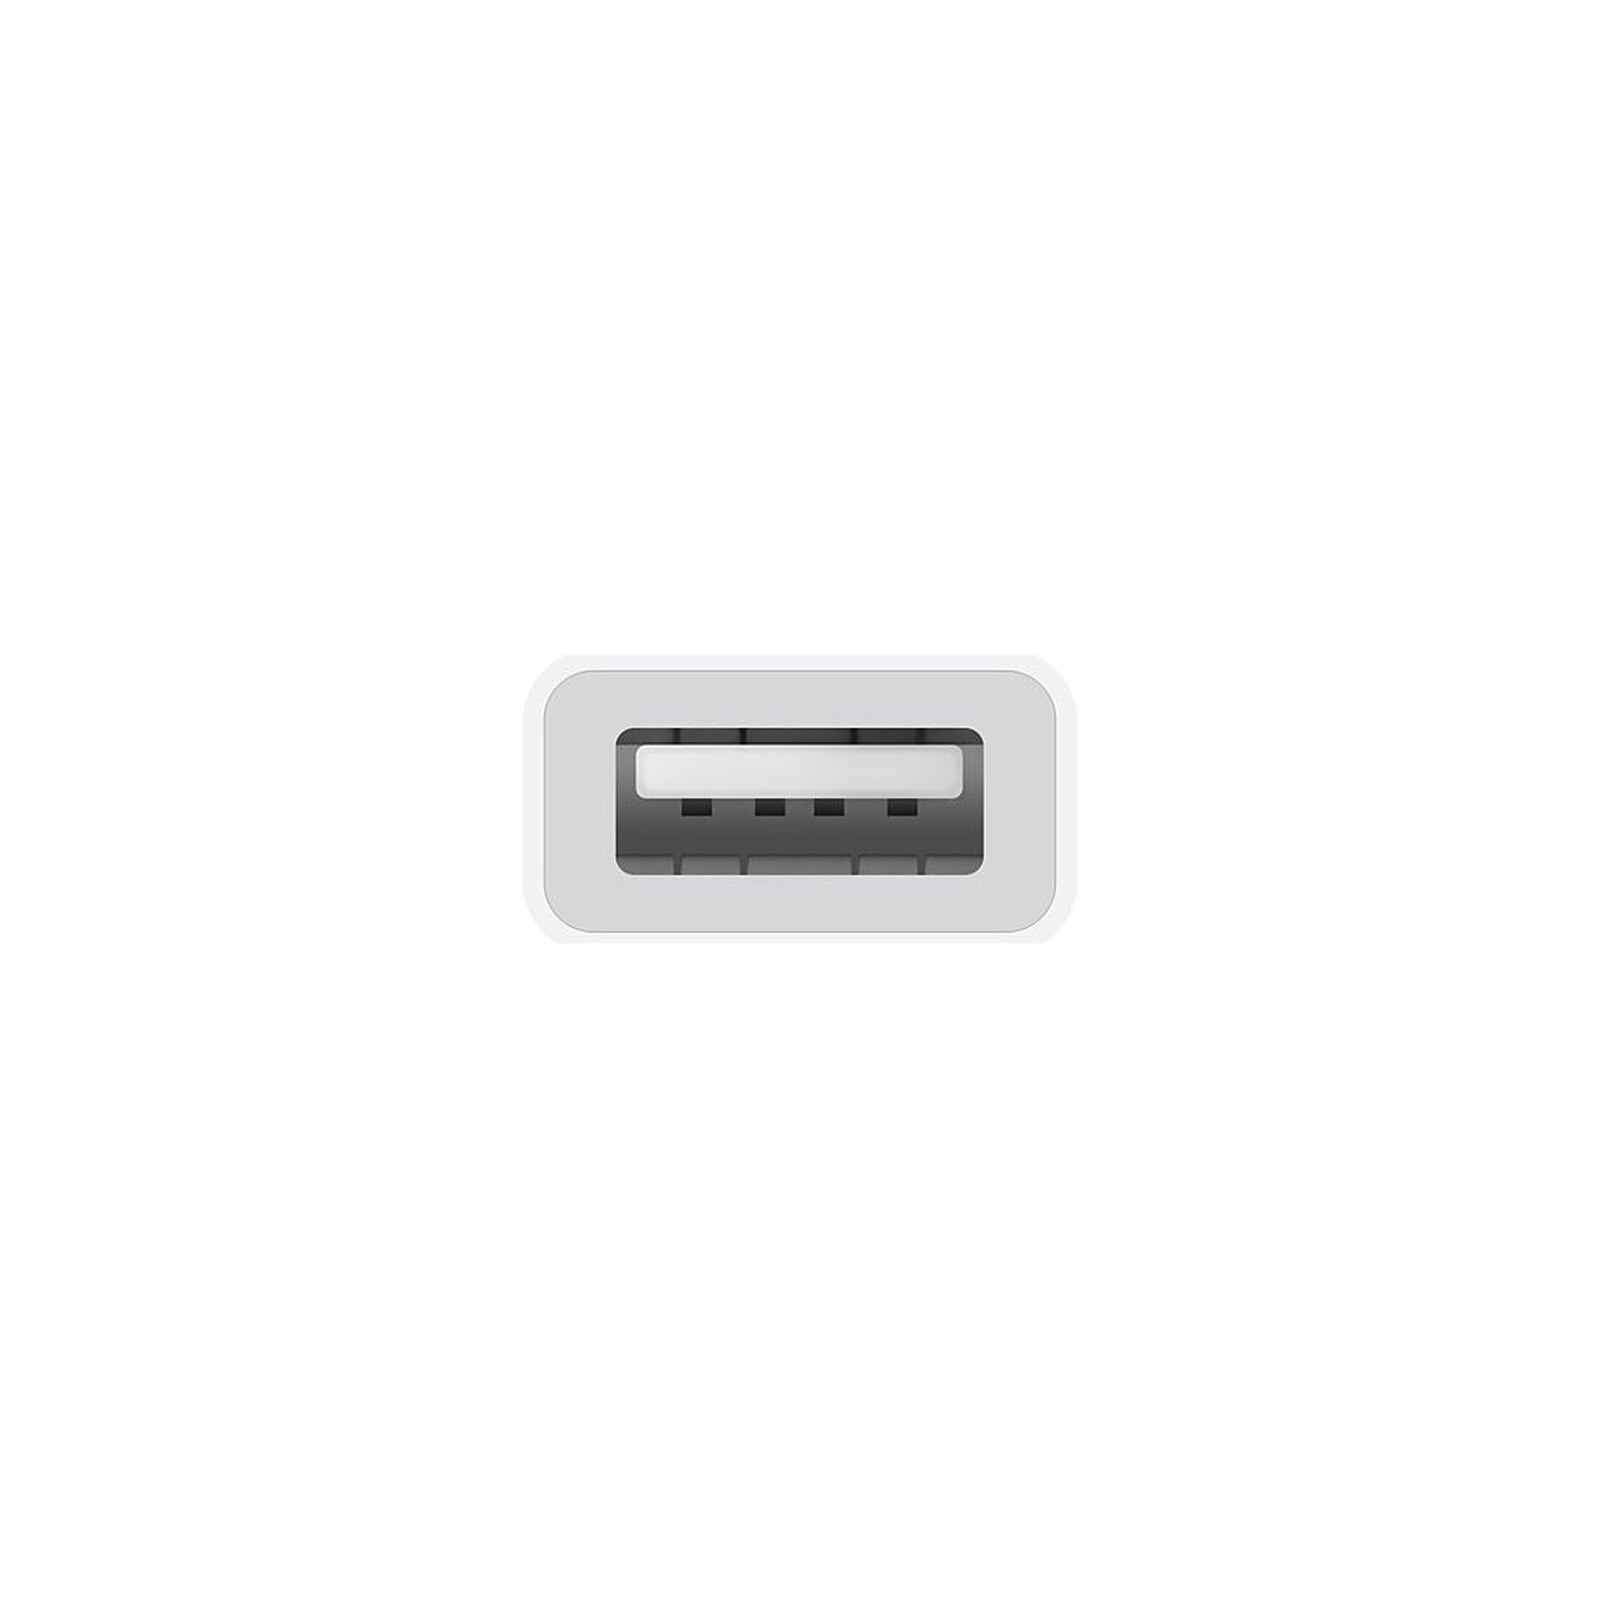 Adaptateur USB-C vers USB 3.0 - Hub USB-C - Clé USB - Macbook Pro - Macbook  Air 